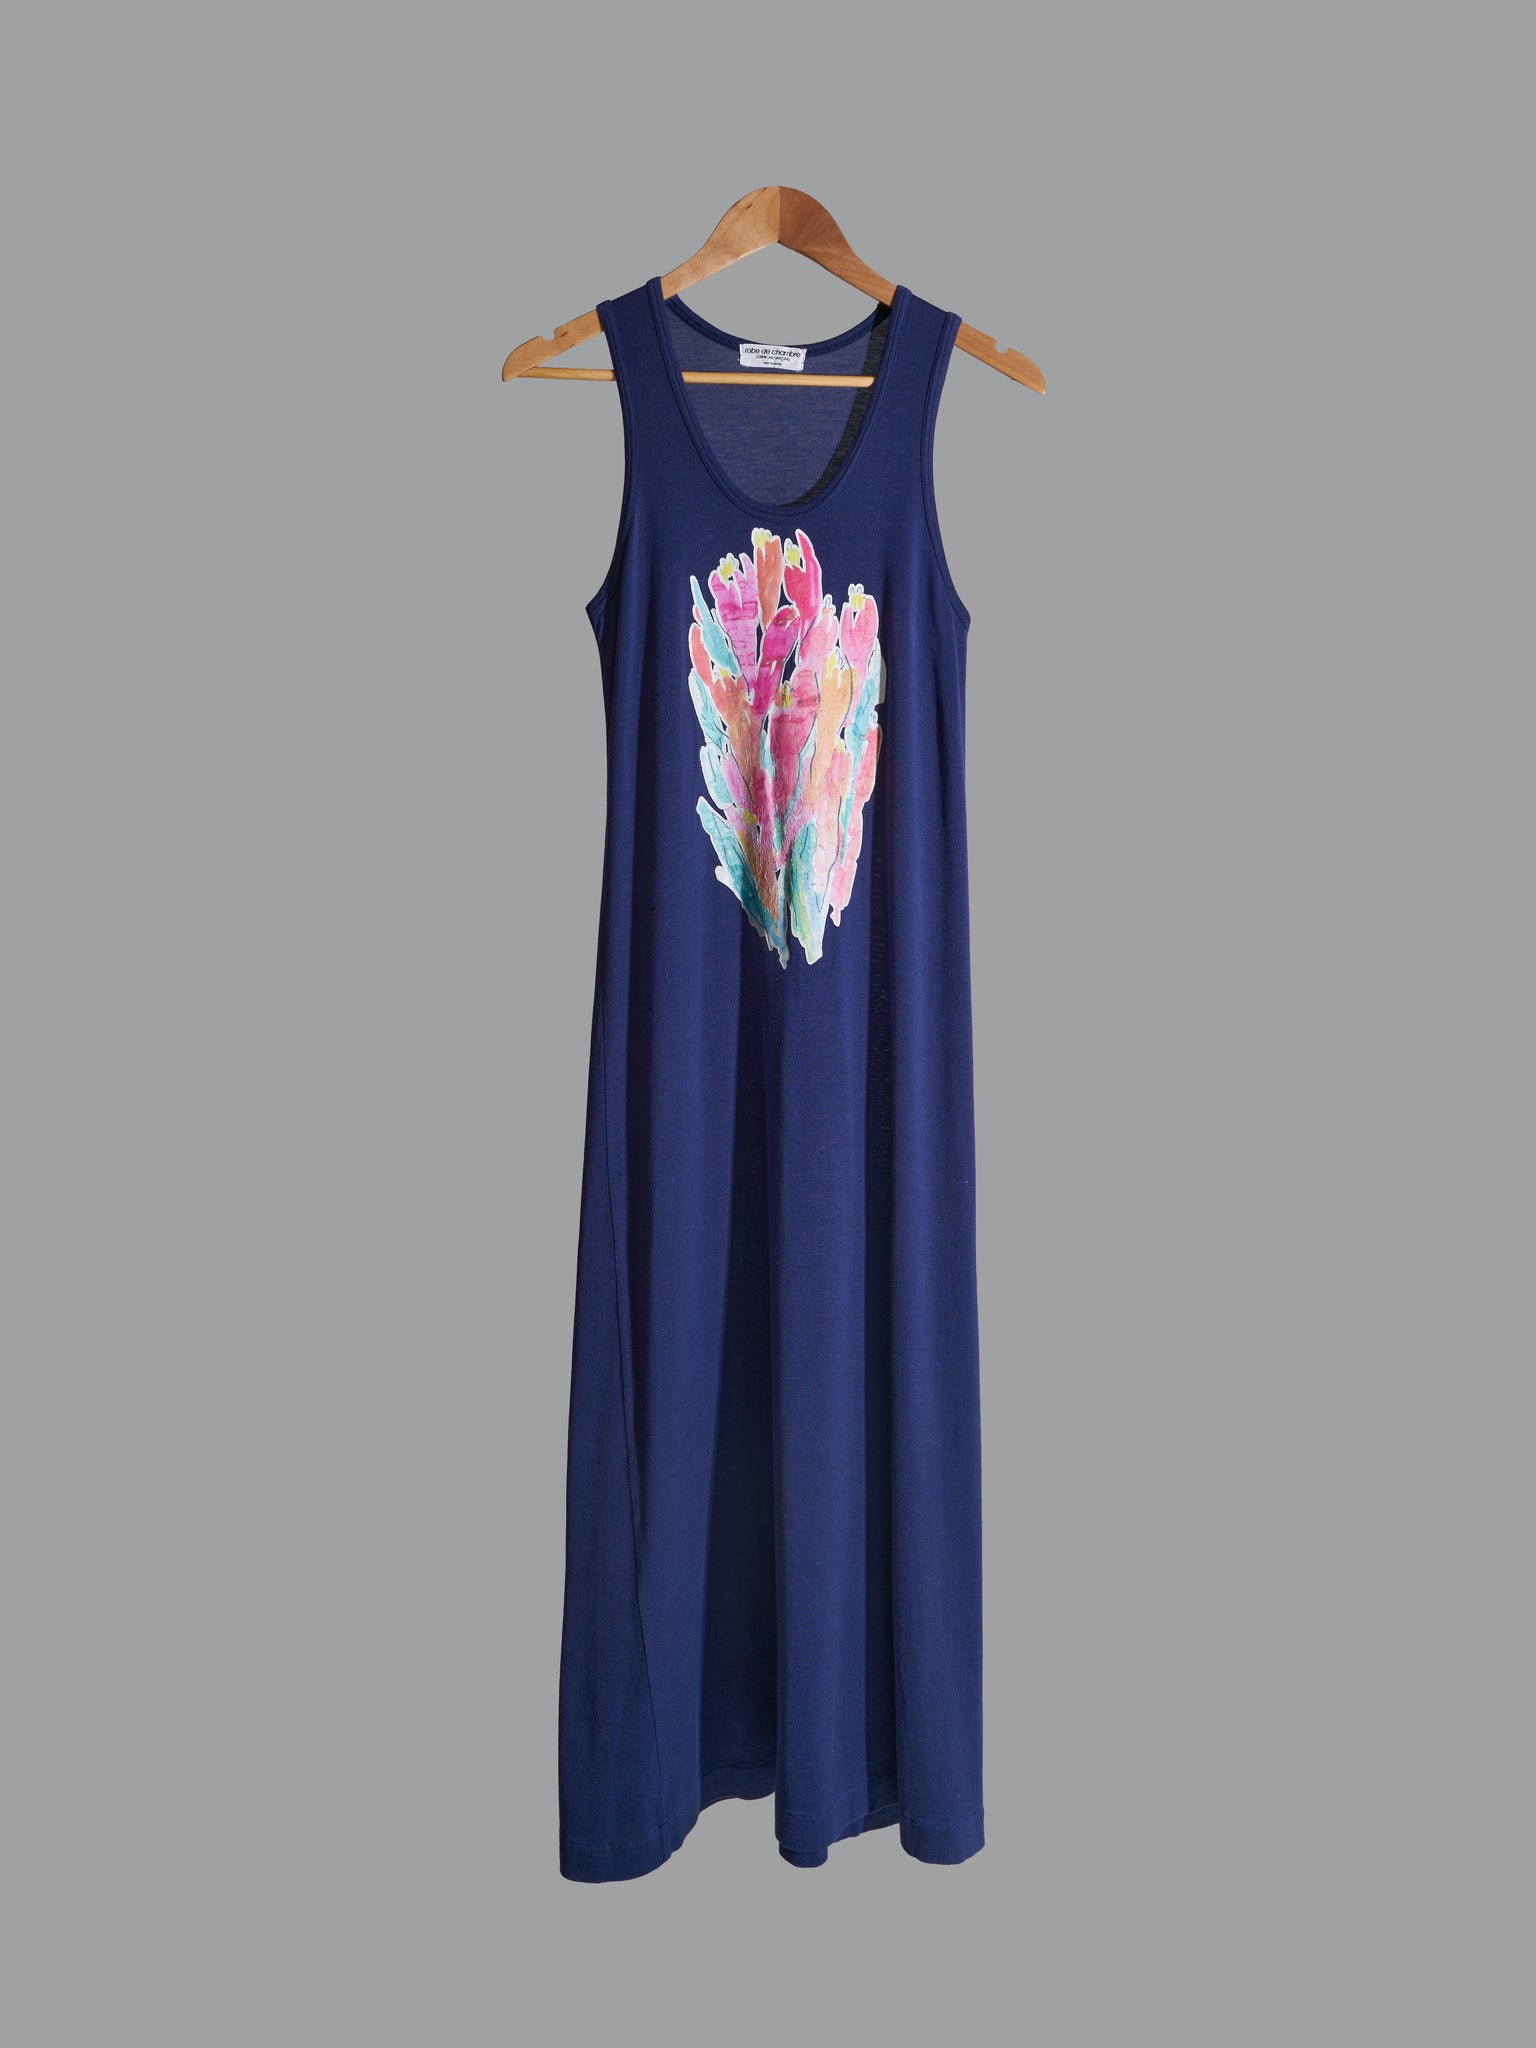 Comme des Garcons SS1996 blue cotton flower print sleeveless dress - S